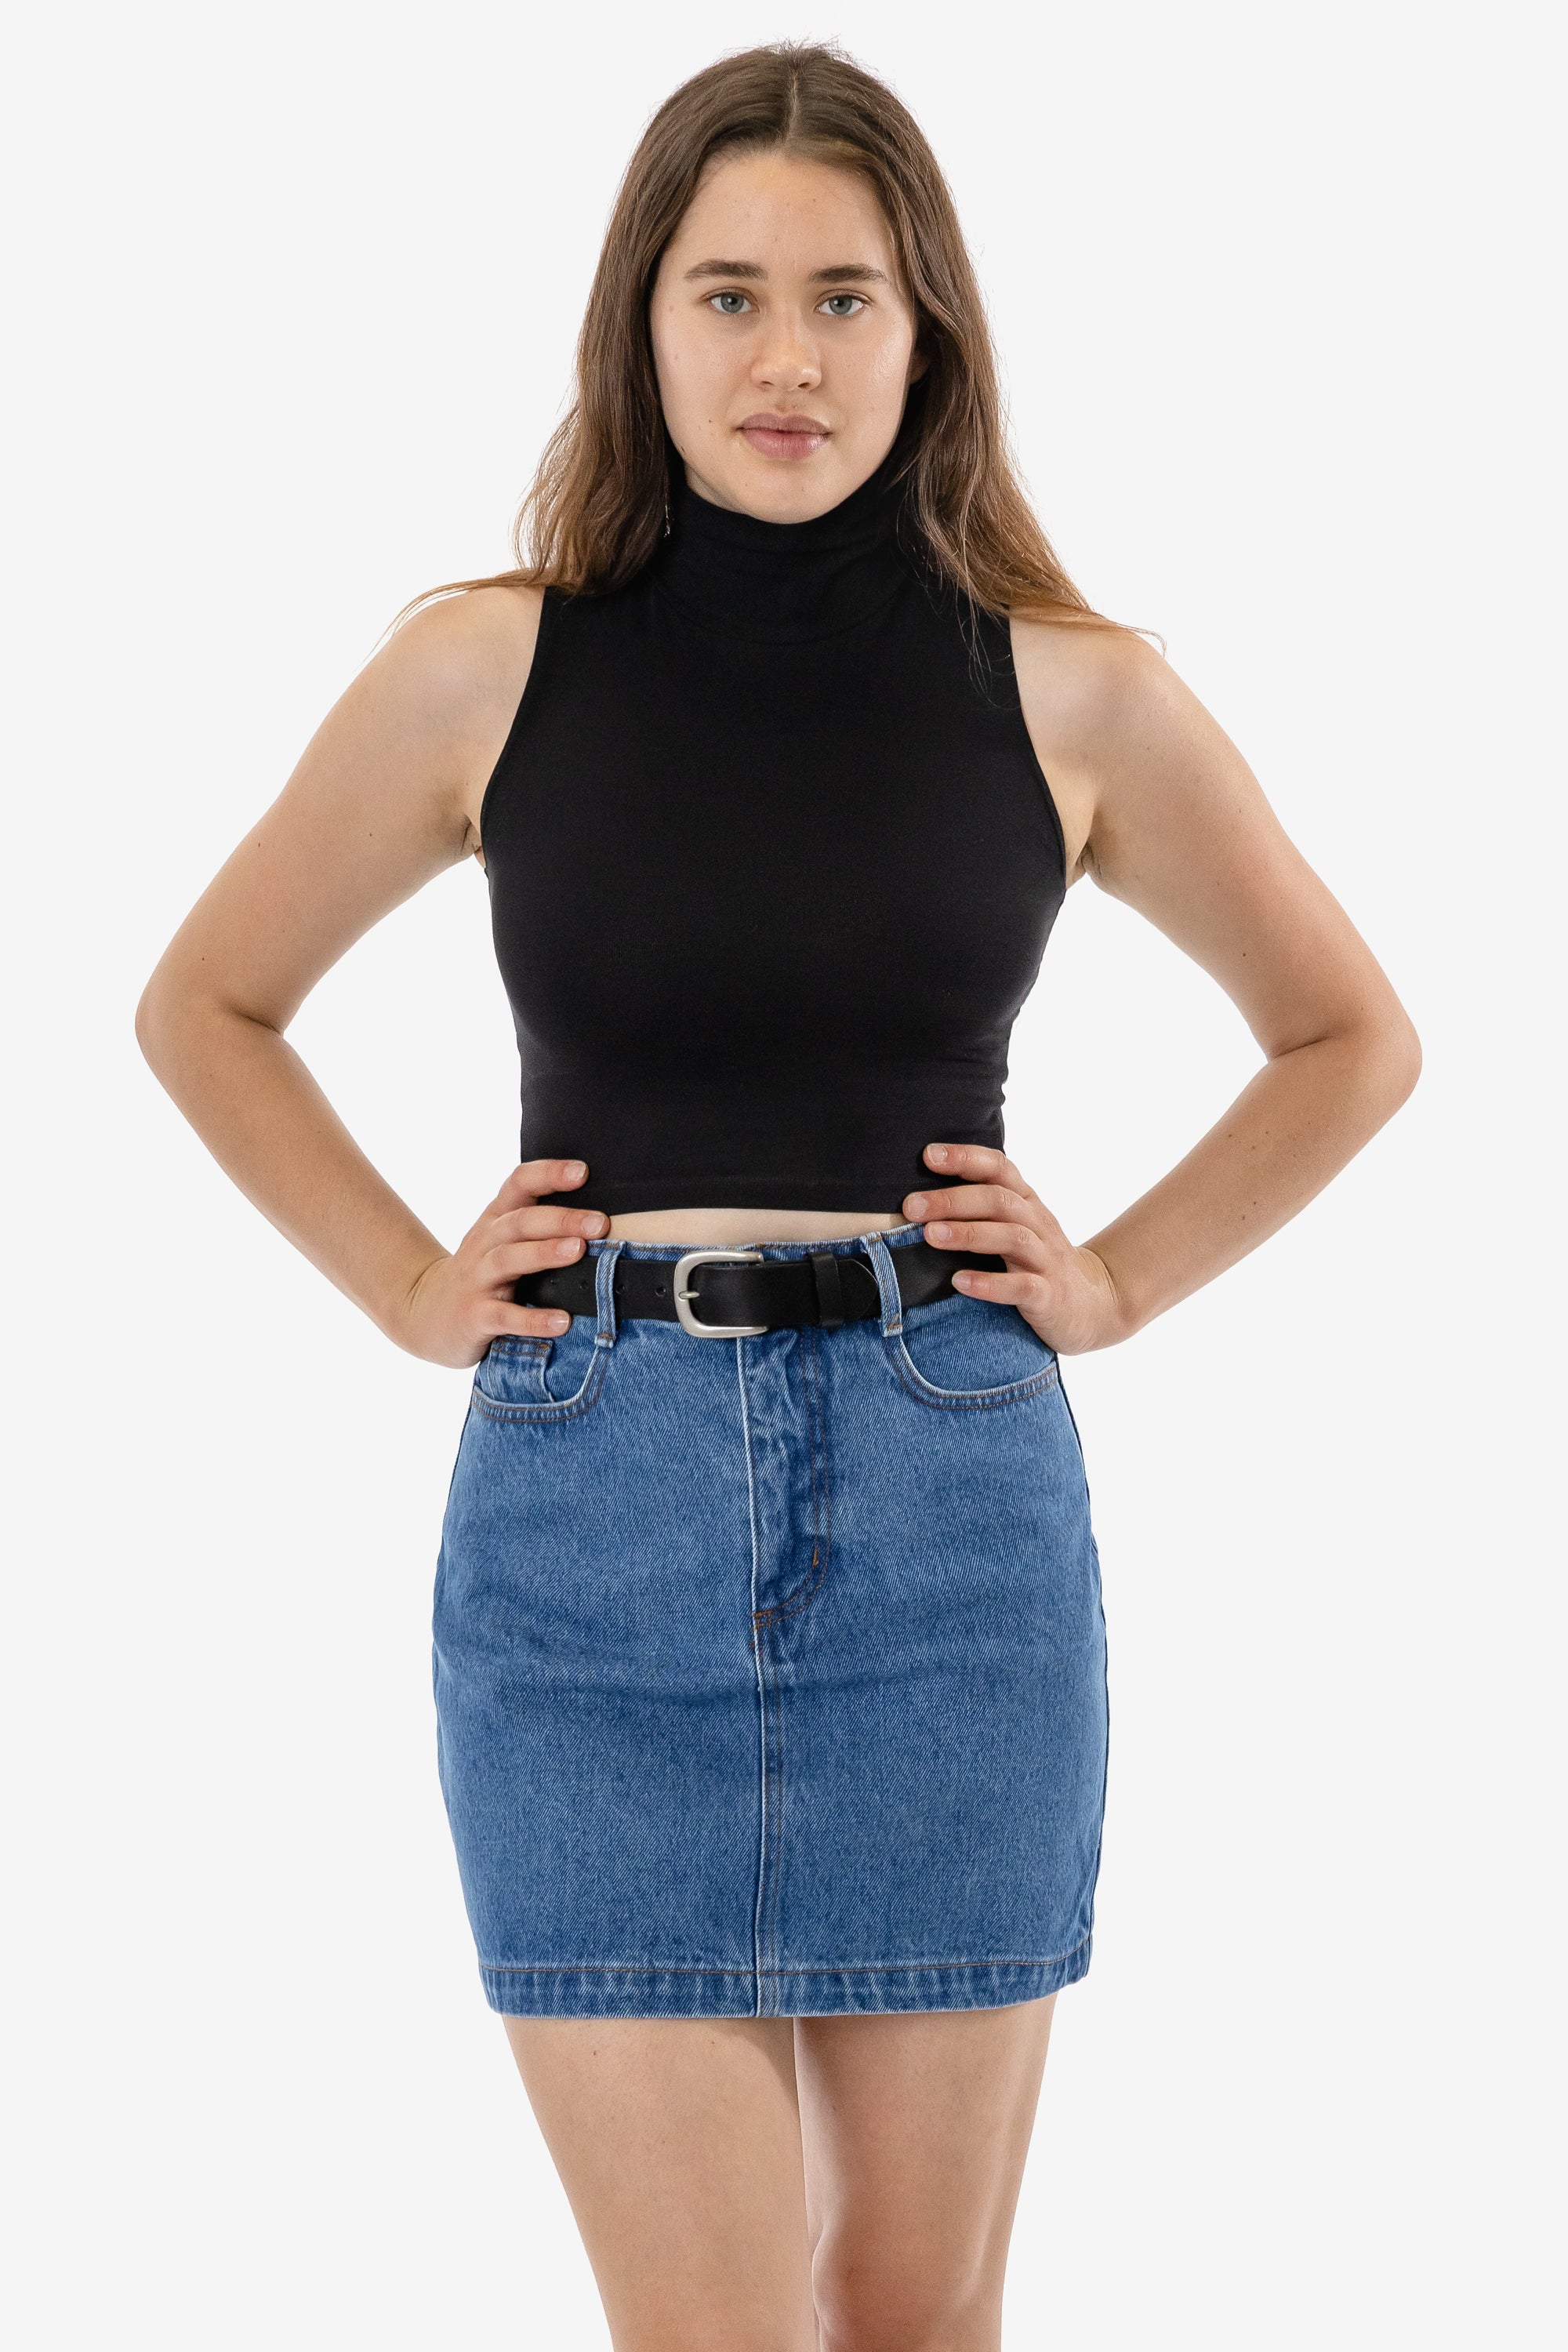 RDNW33 - Denim Mini Skirt – Los Angeles Apparel